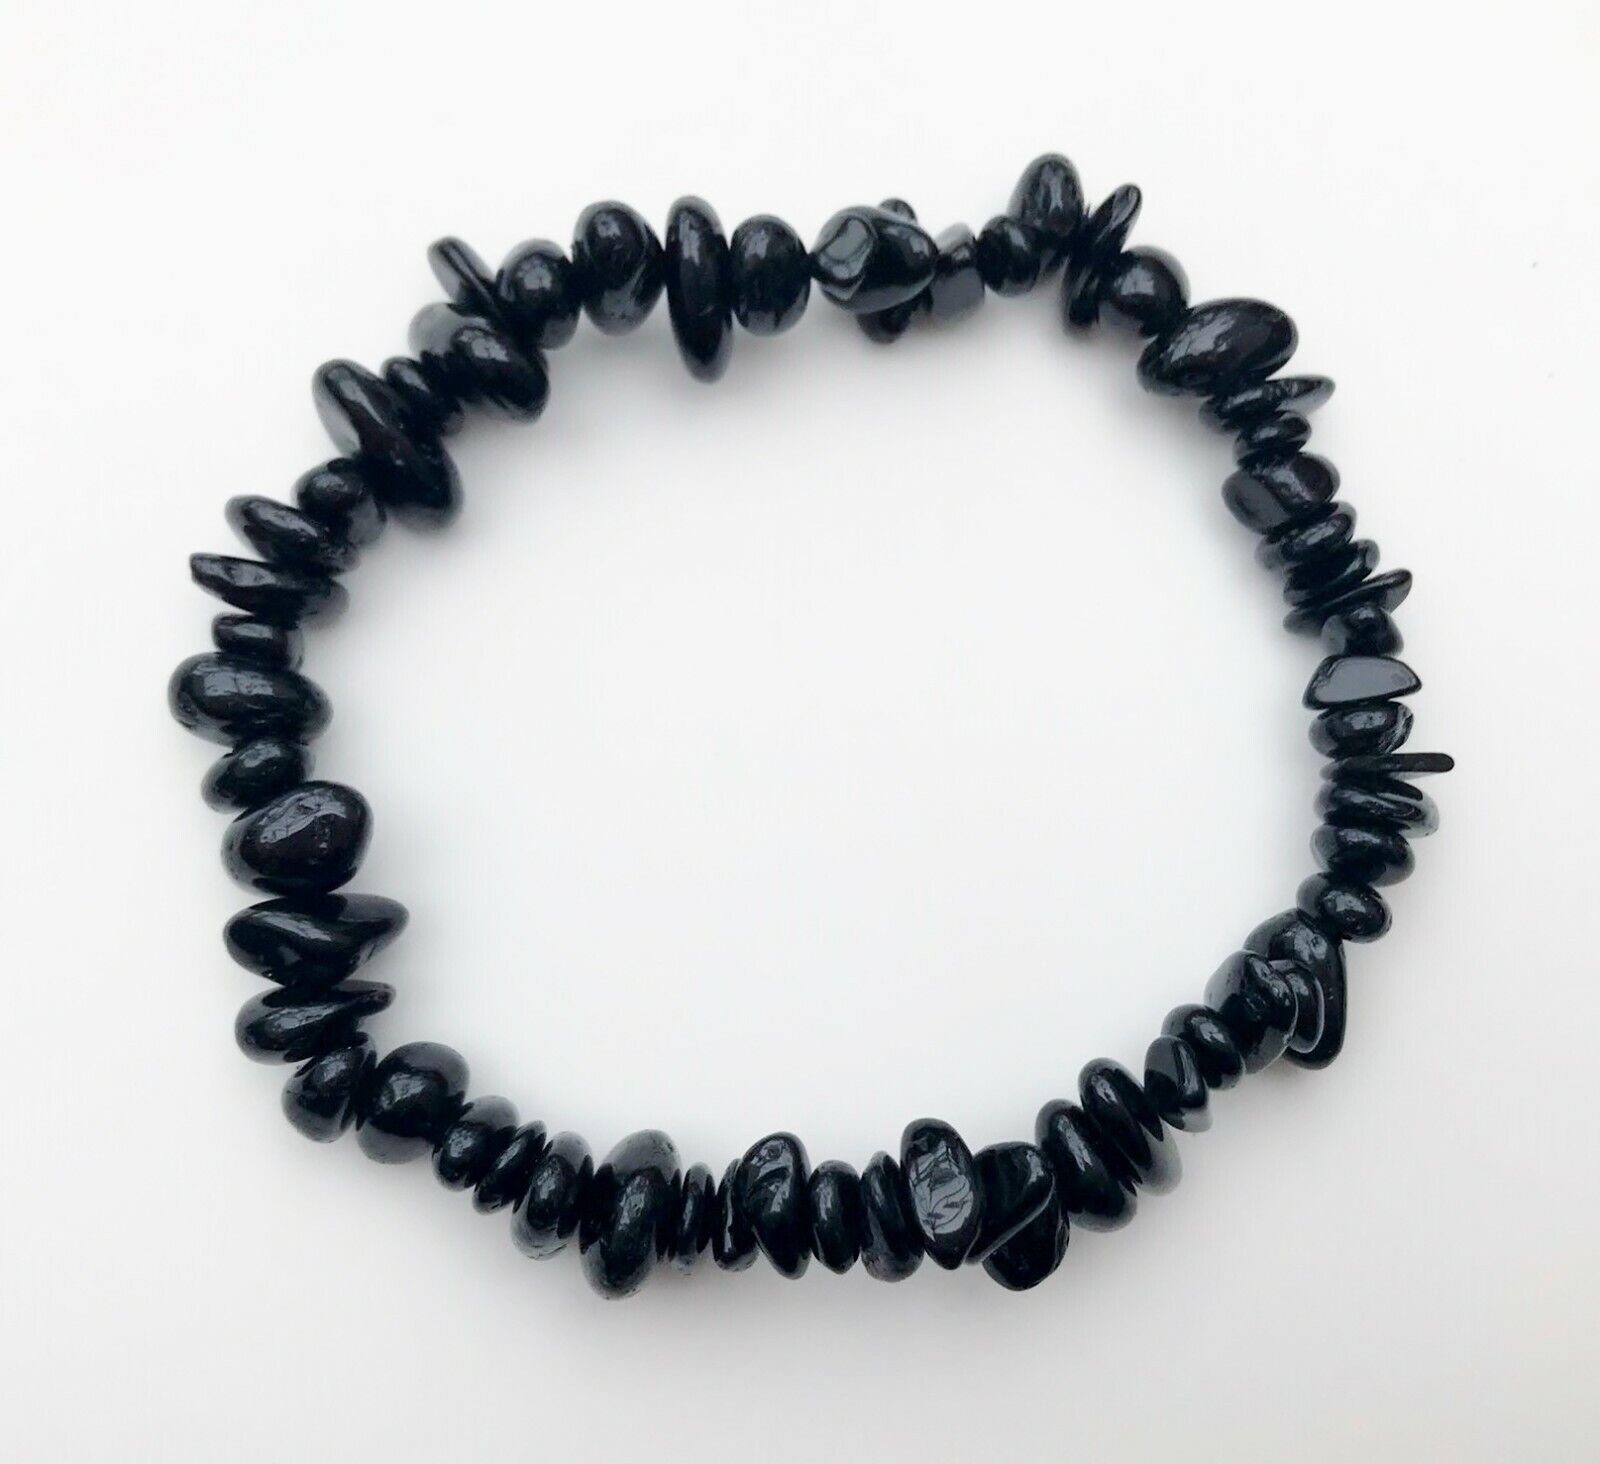 A Grade Black Tourmaline Crystal Chip Bracelet - Reiki Charged - Protection